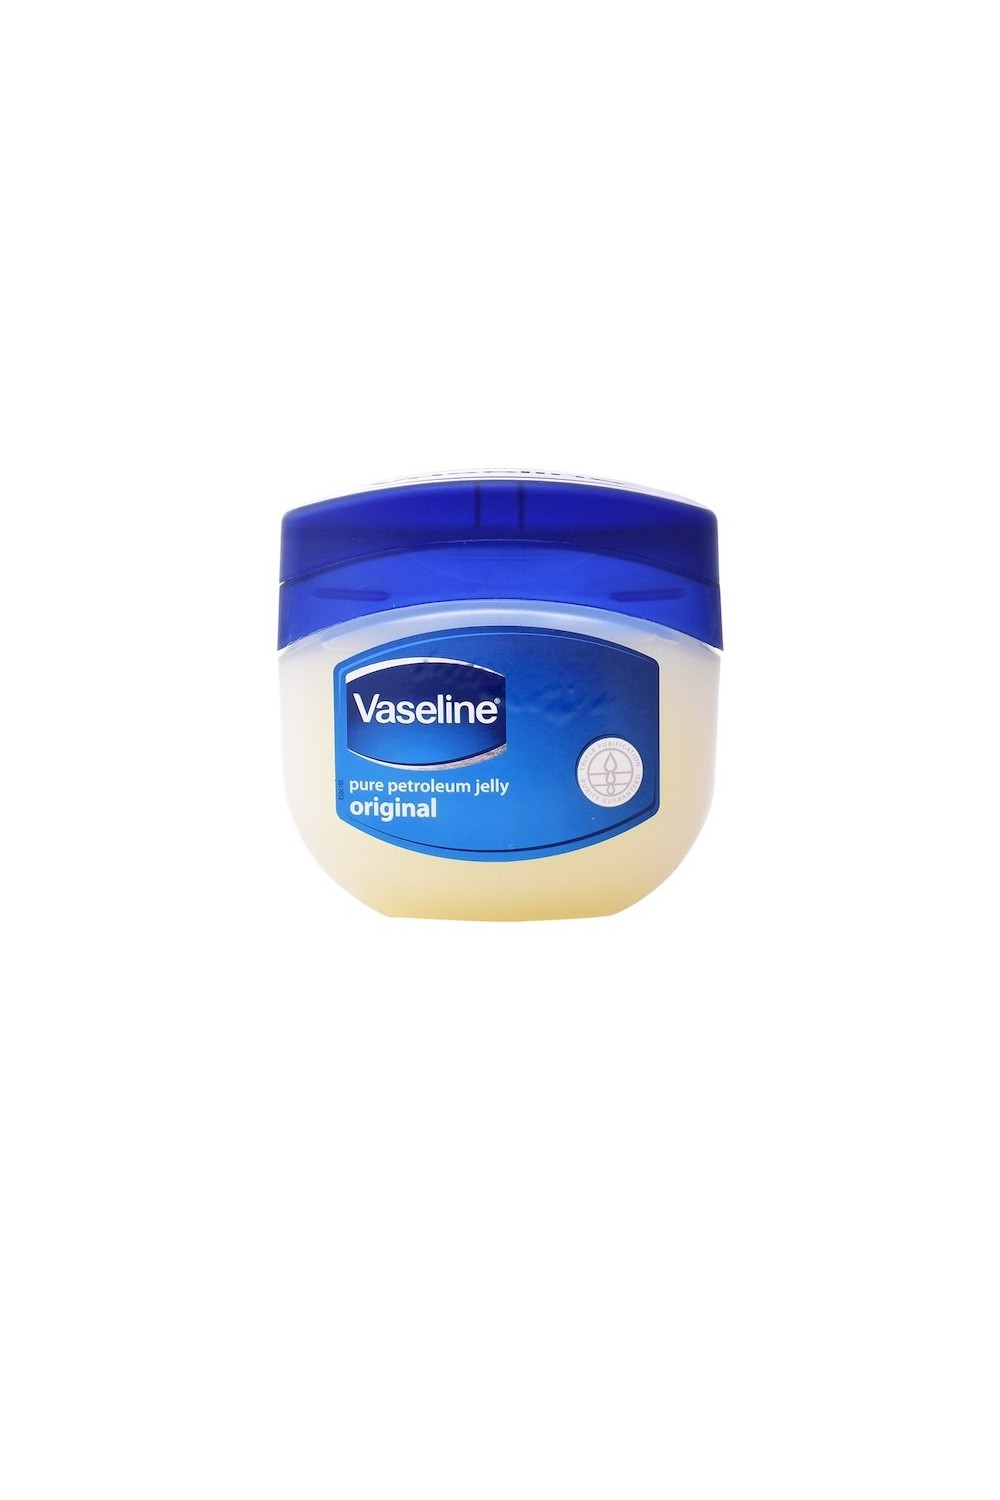 Vasenol Vaseline Petroleum Jelly Original 250ml